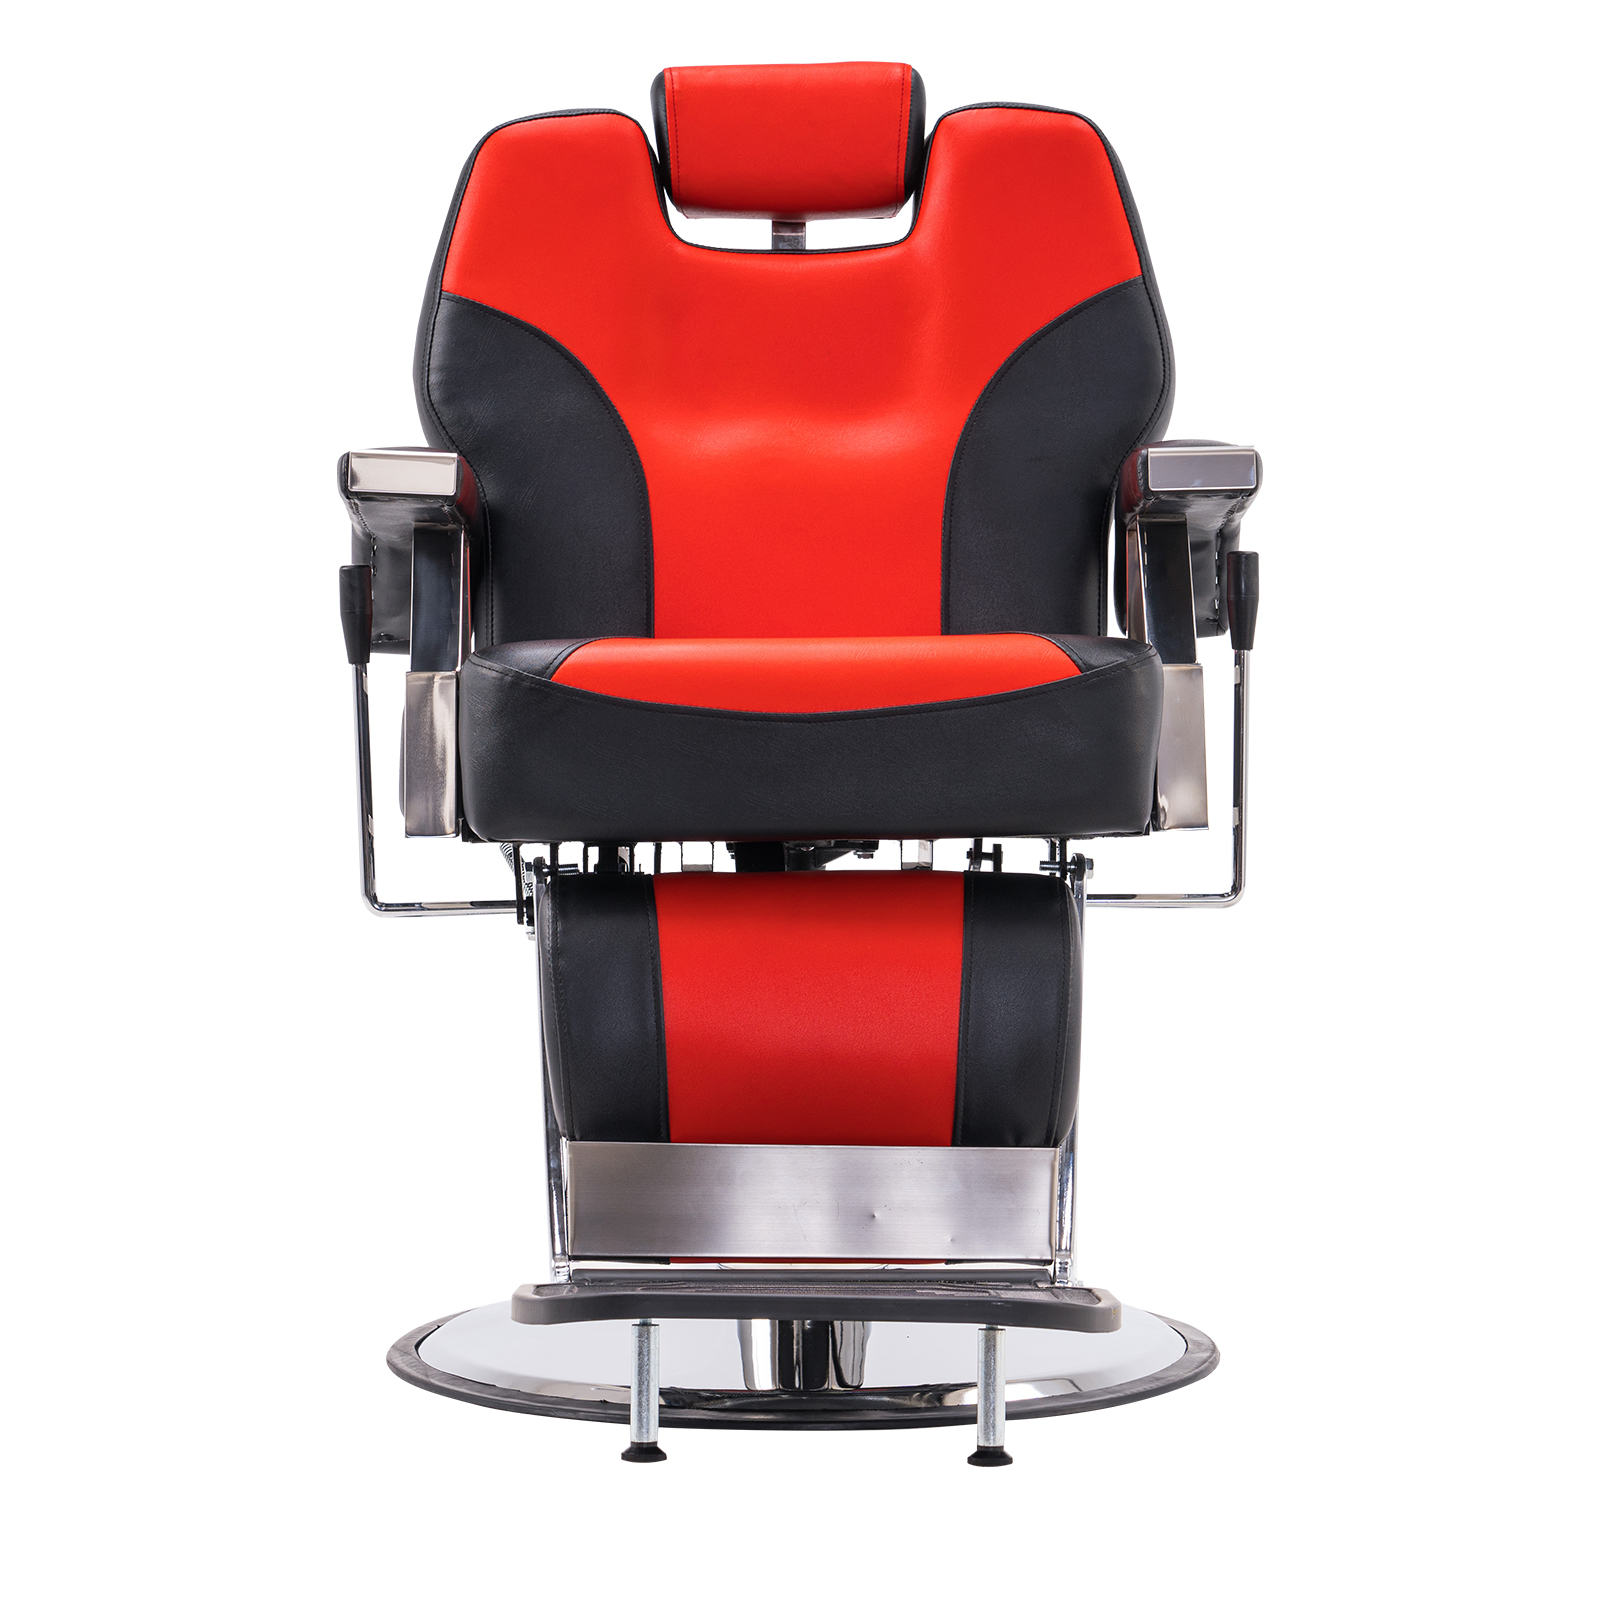 Barberpub Hydraulic Recline Barber Chair Red Salon Beauty Spa Styling Equipment 2801rb